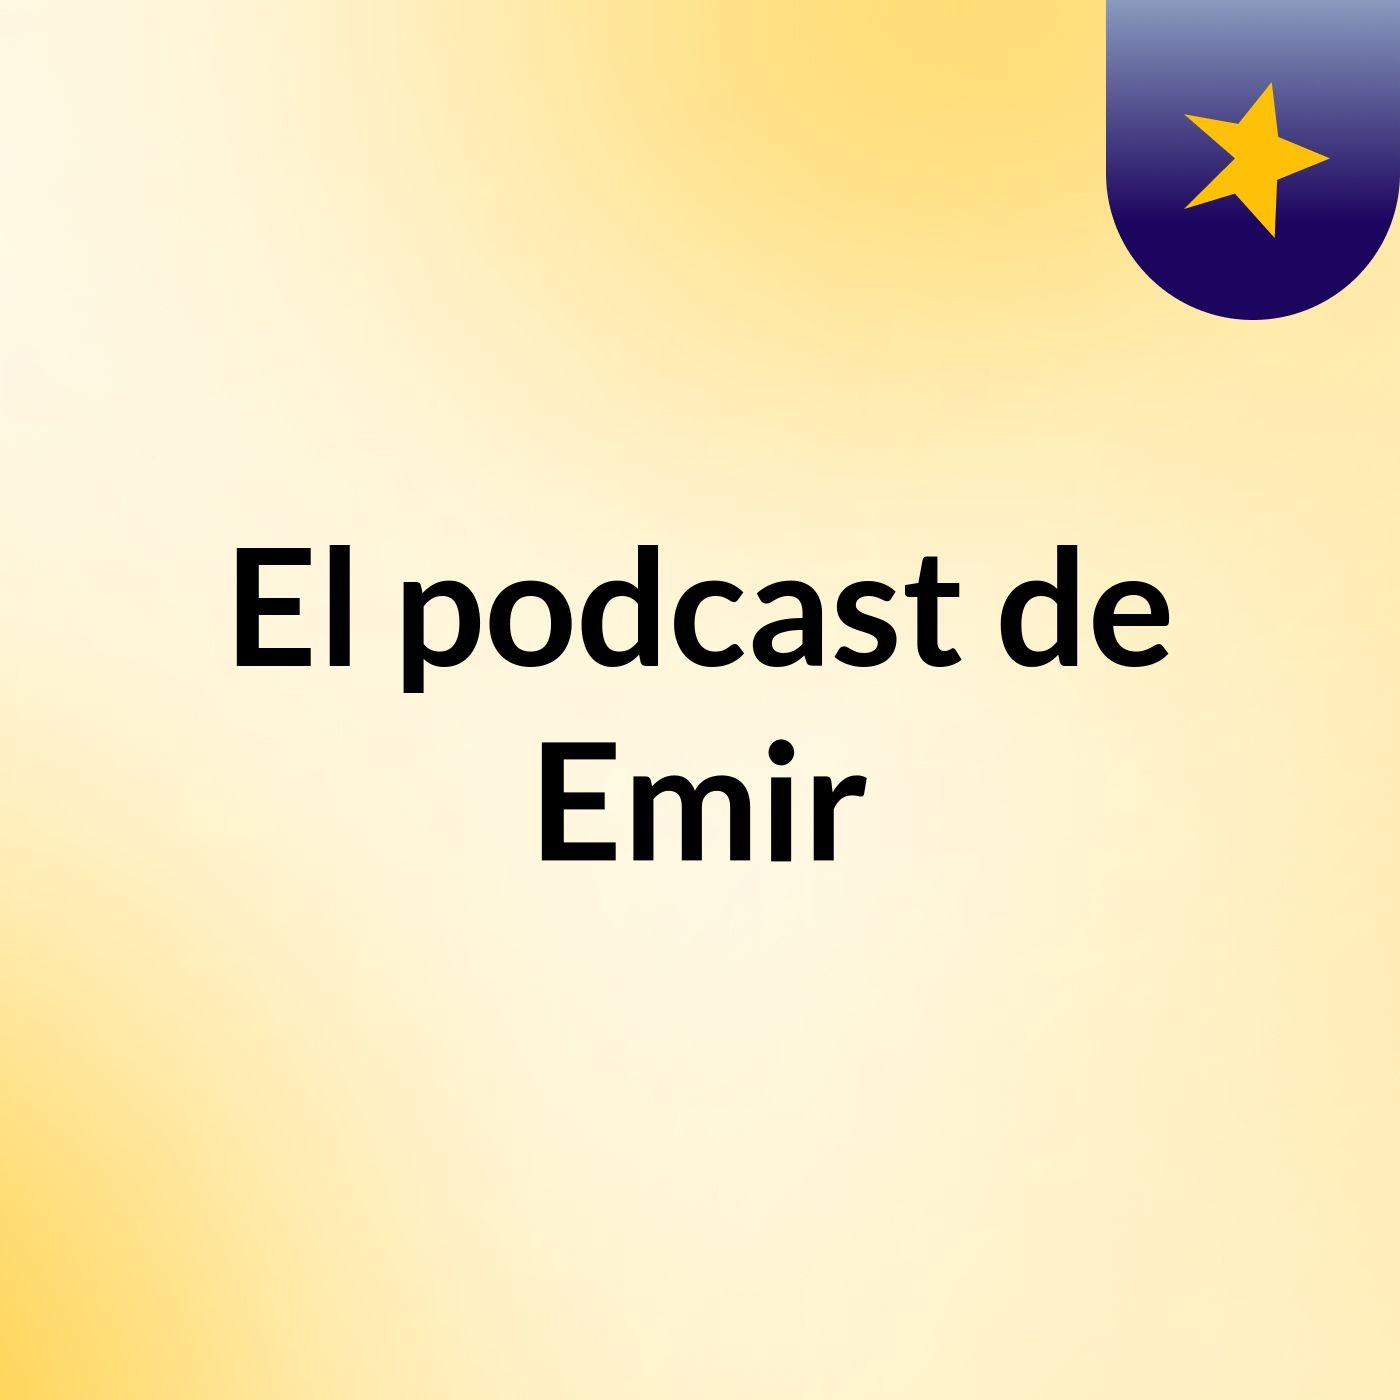 Episodio 2 - El podcast de Emir